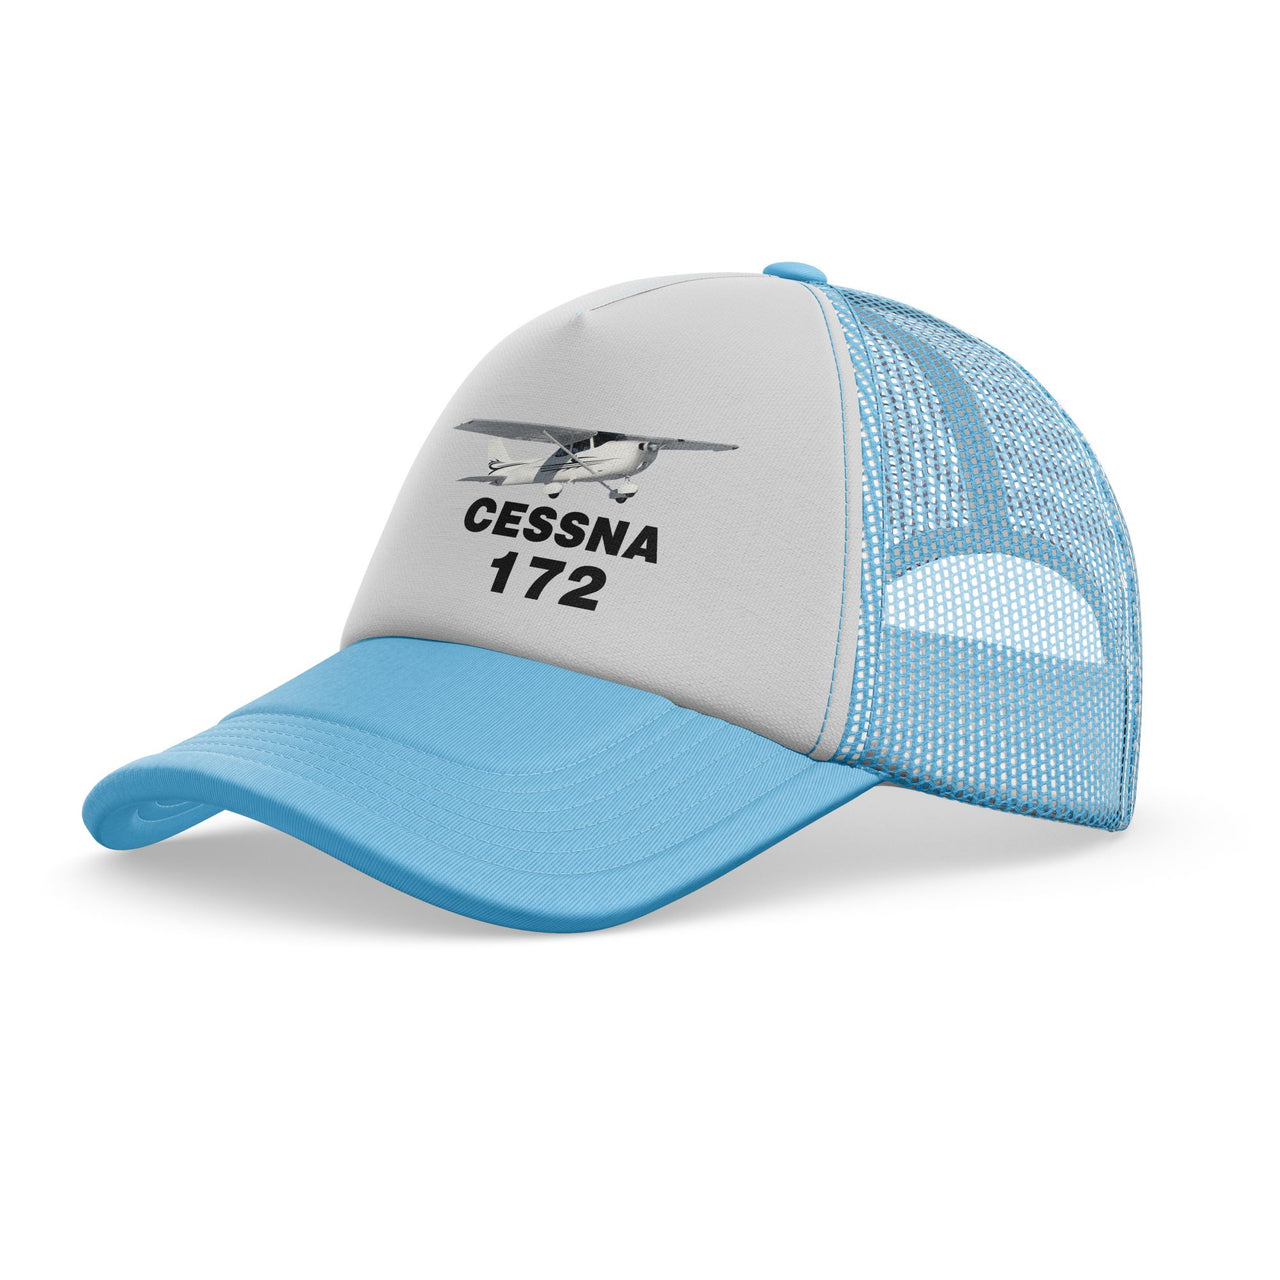 The Cessna 172 Designed Trucker Caps & Hats